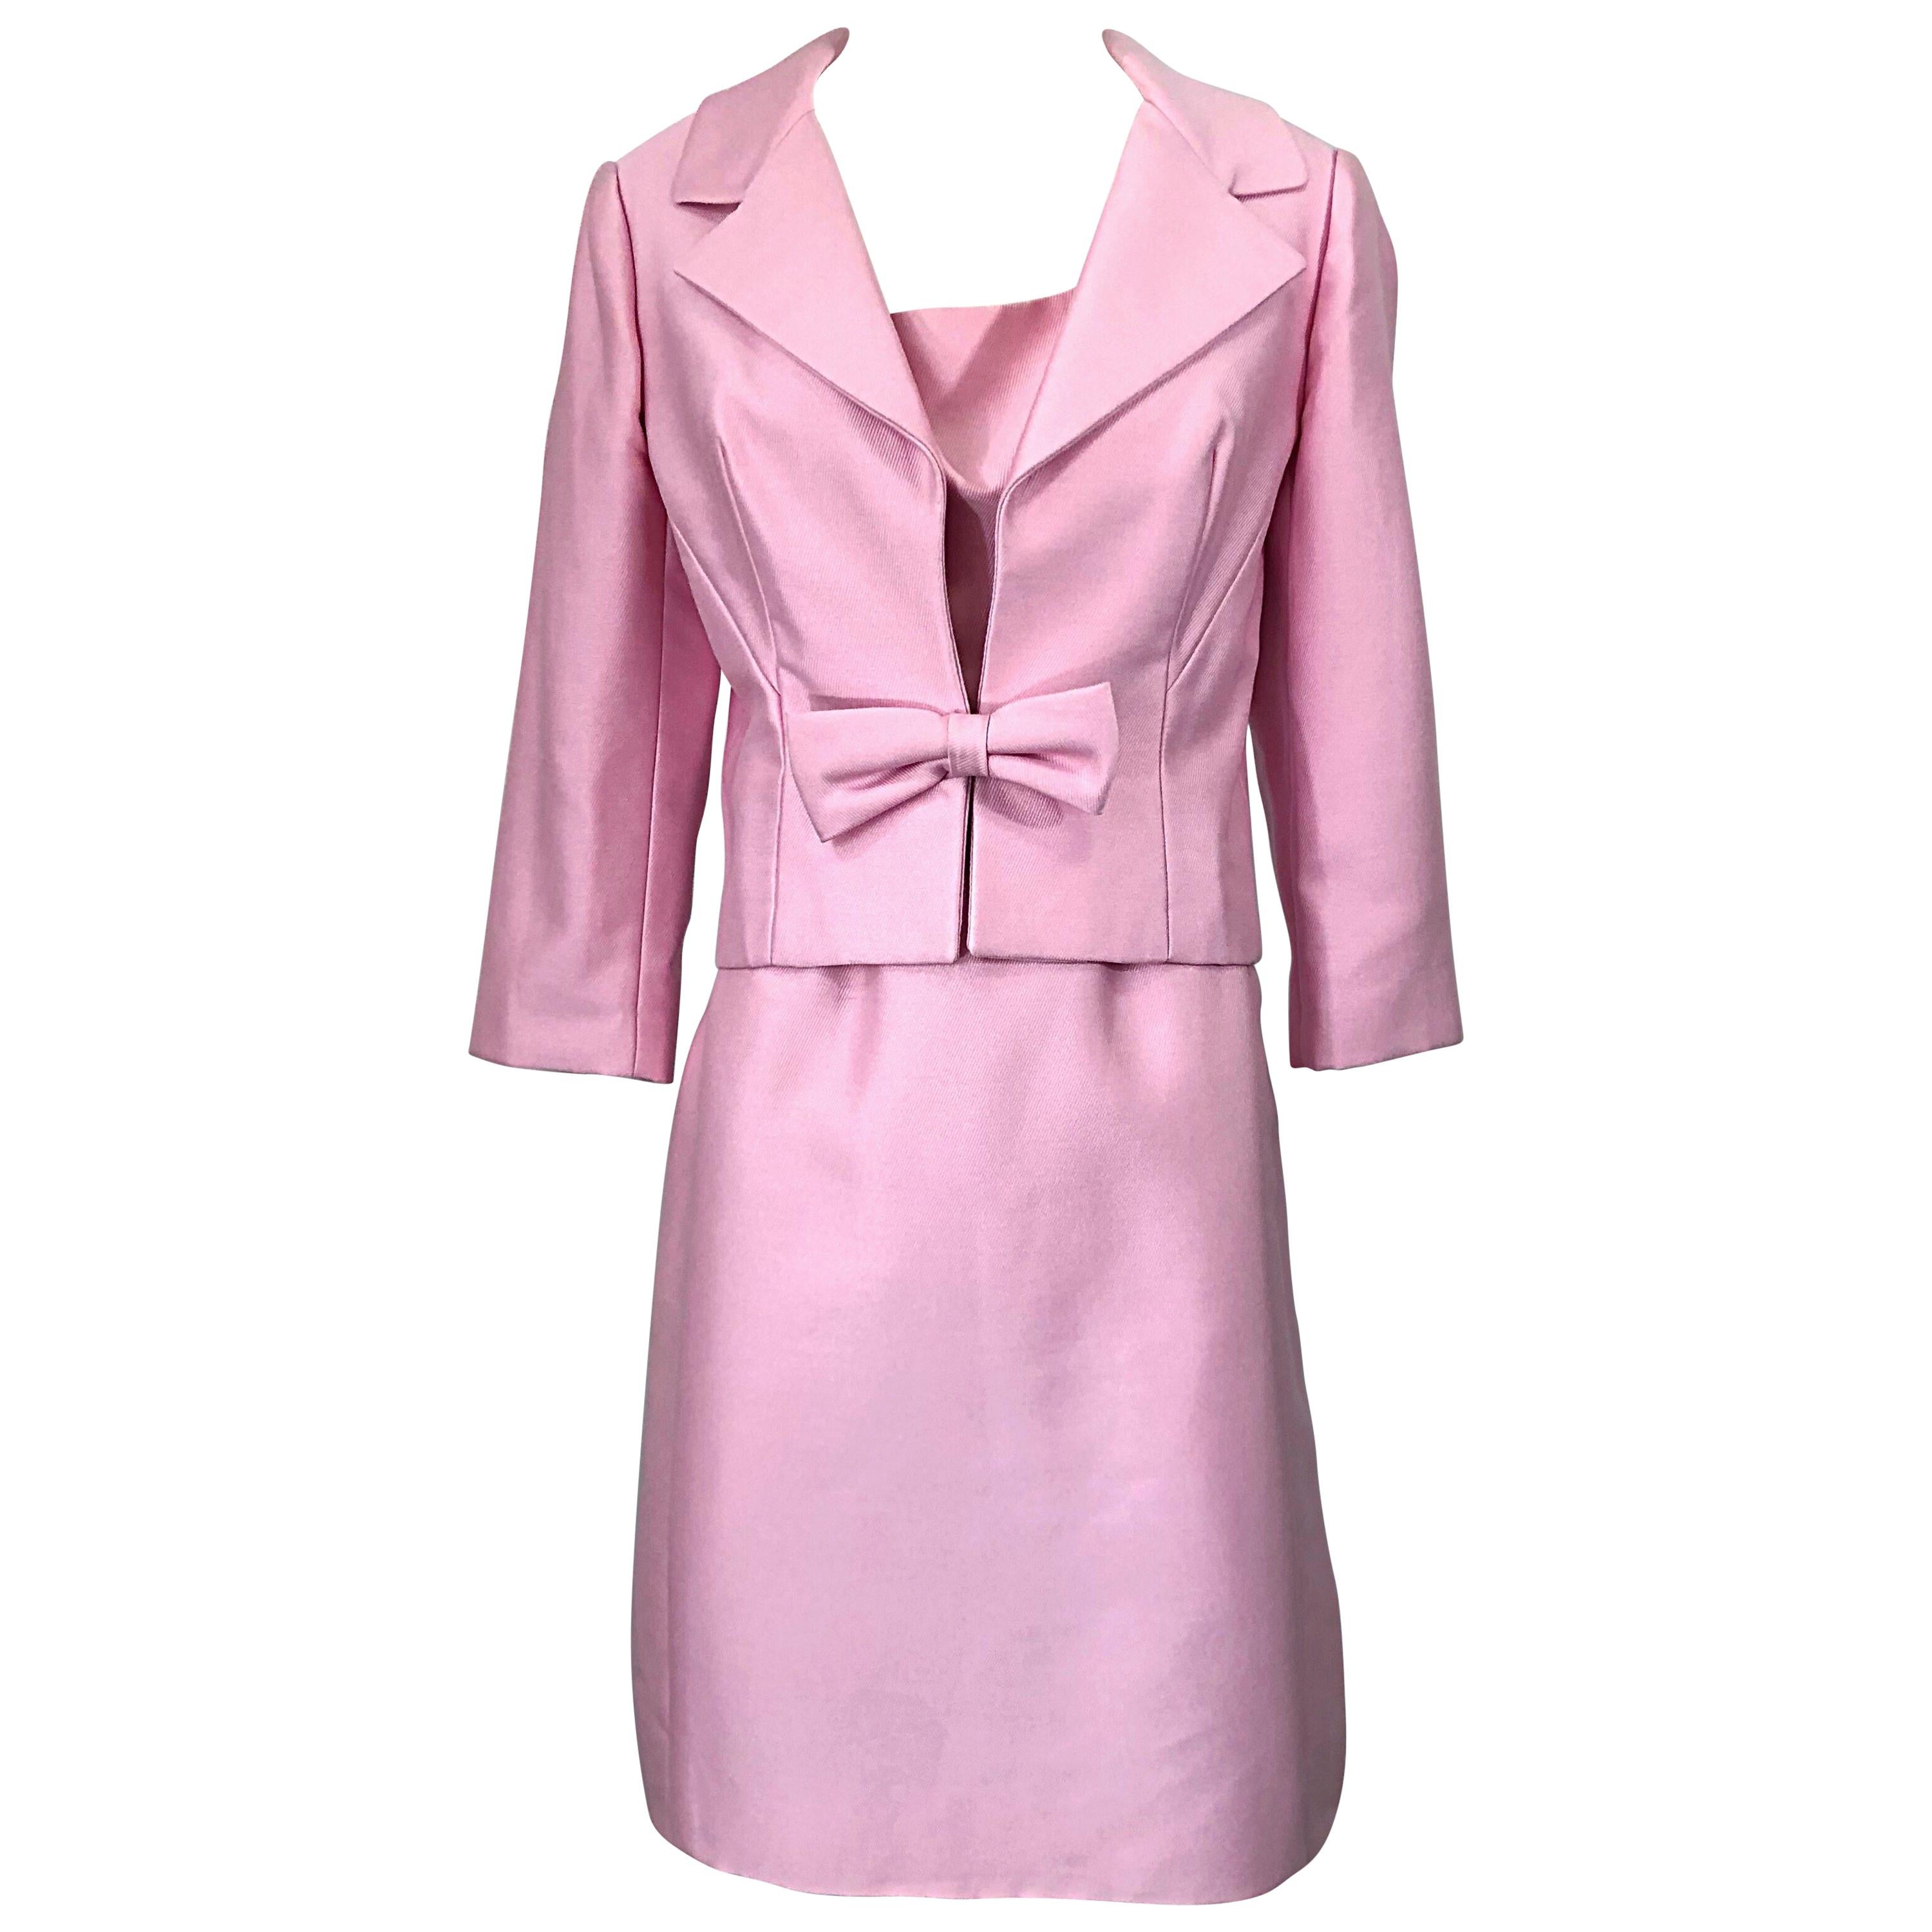 1960s pink jacket.